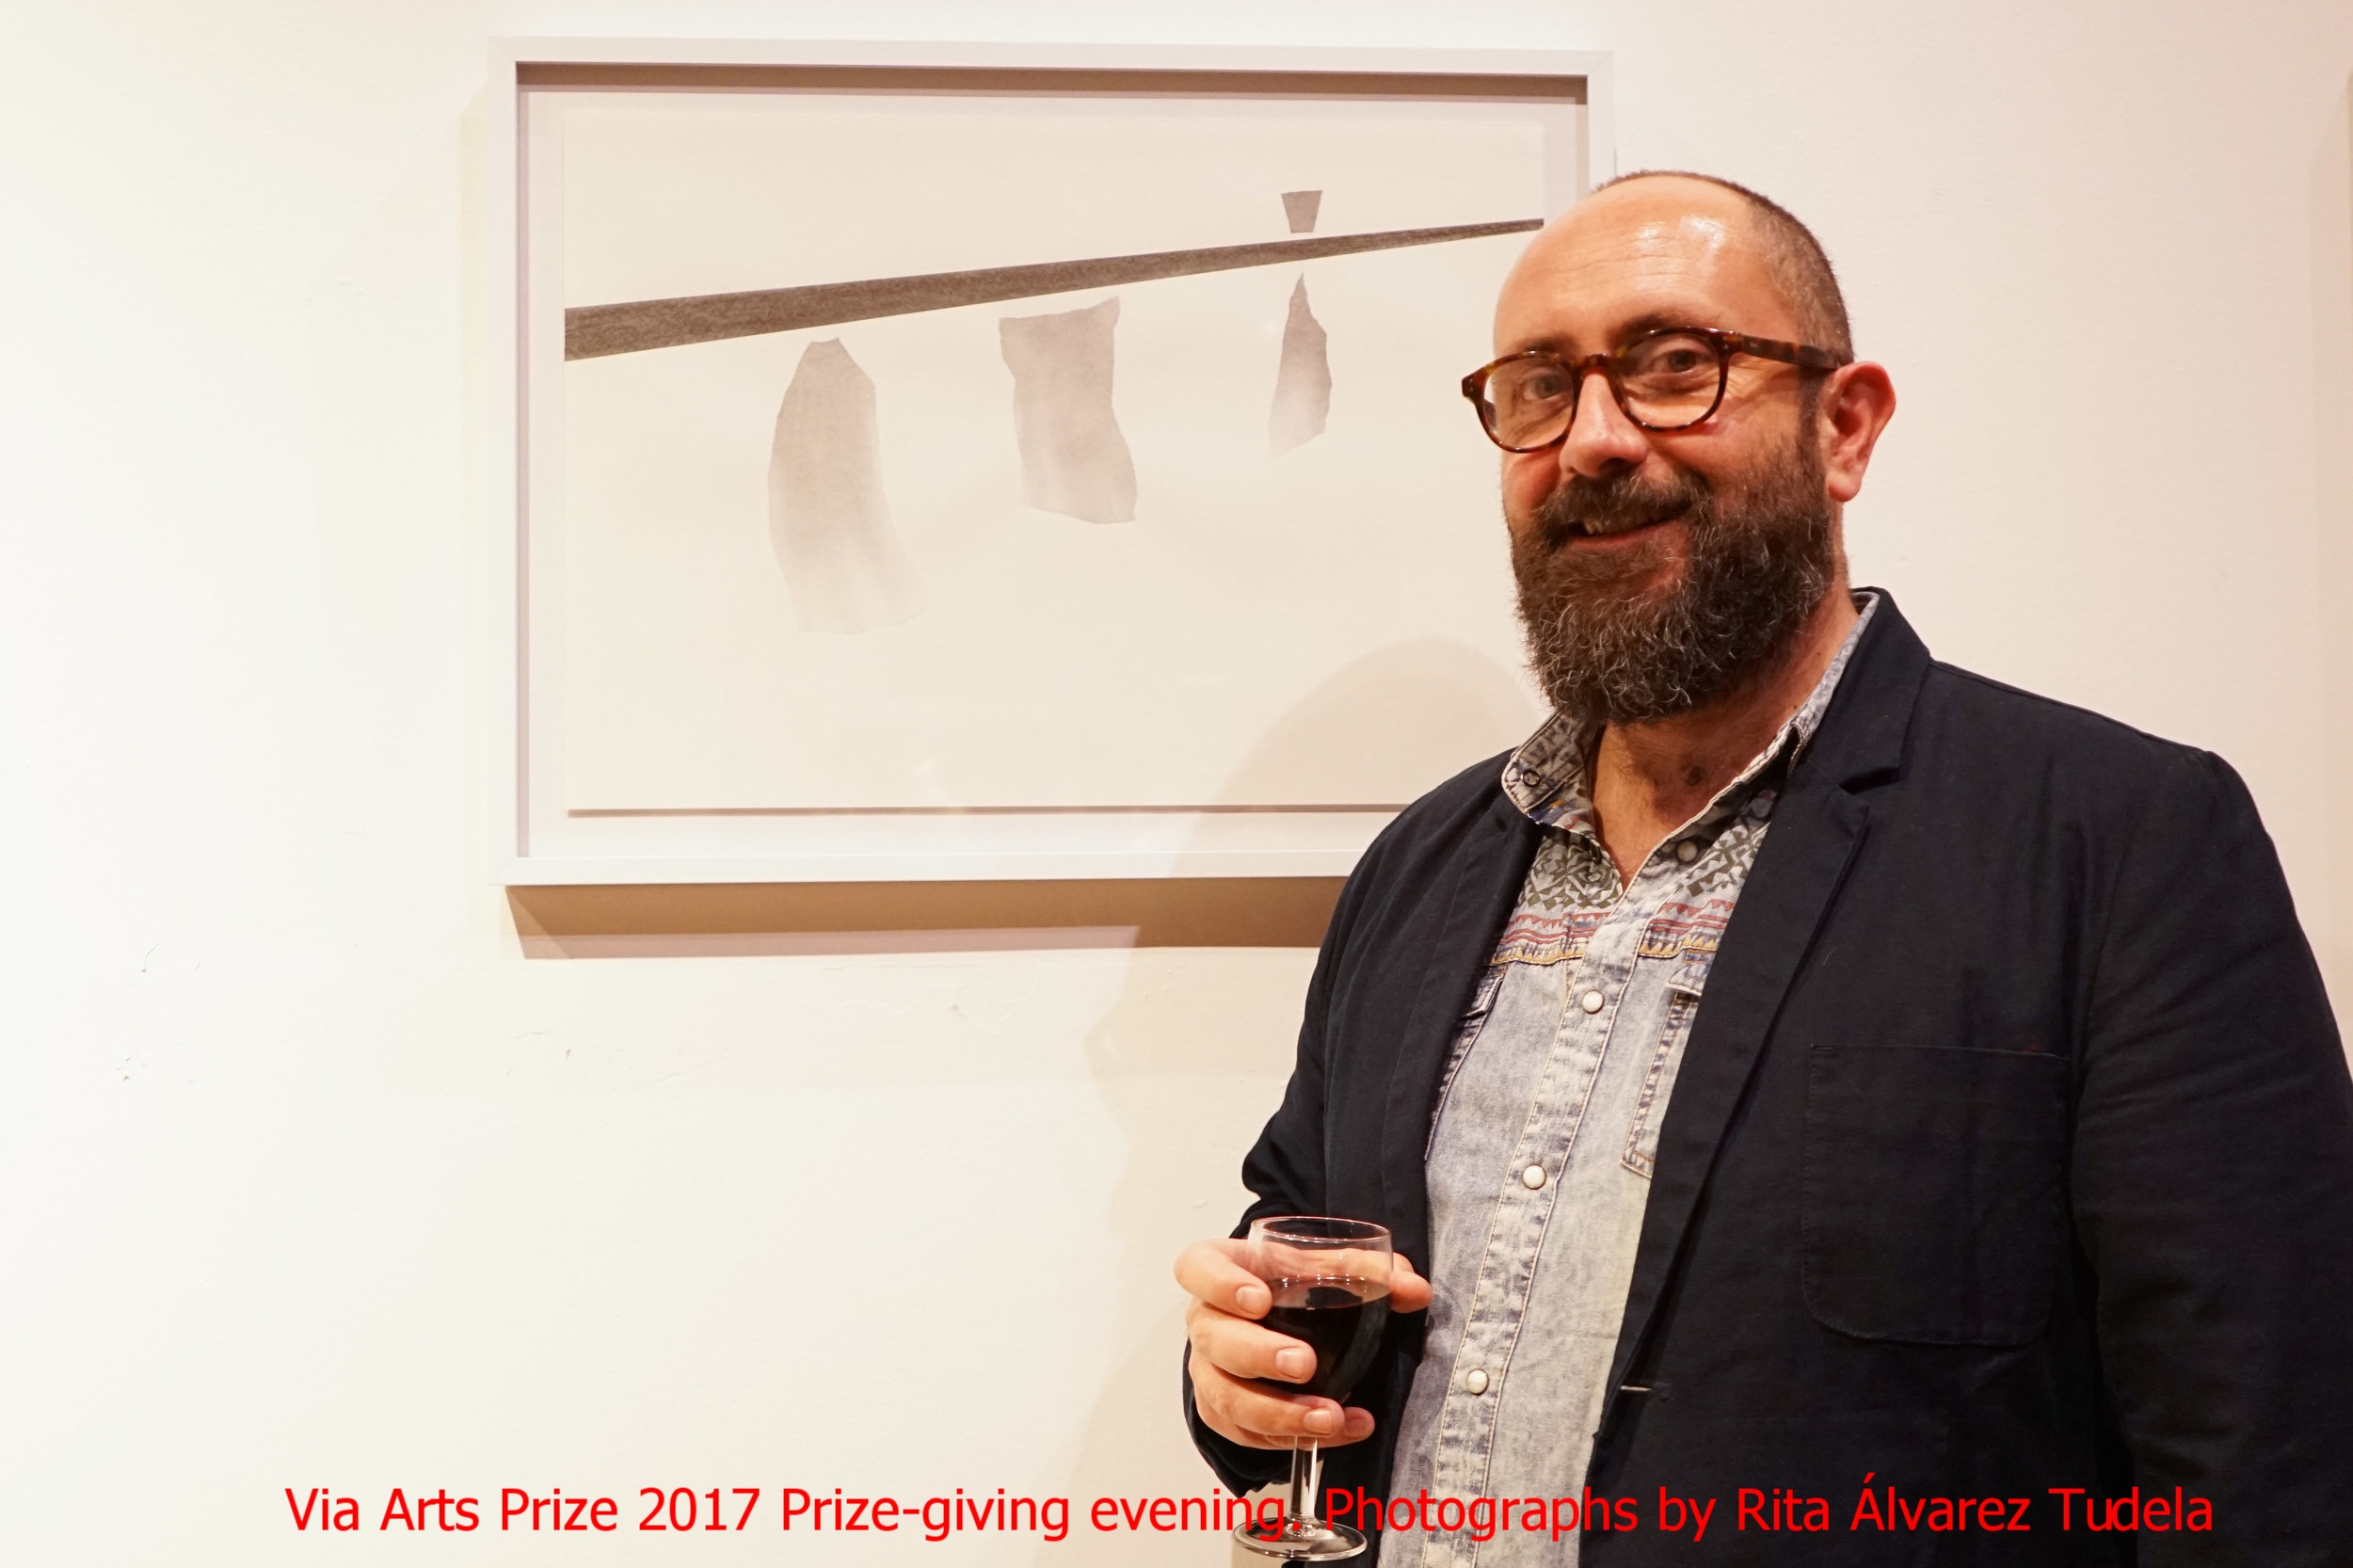 Via Arts Prize 2017 Prize-giving evening. Photographs by Rita Álvarez Tudela